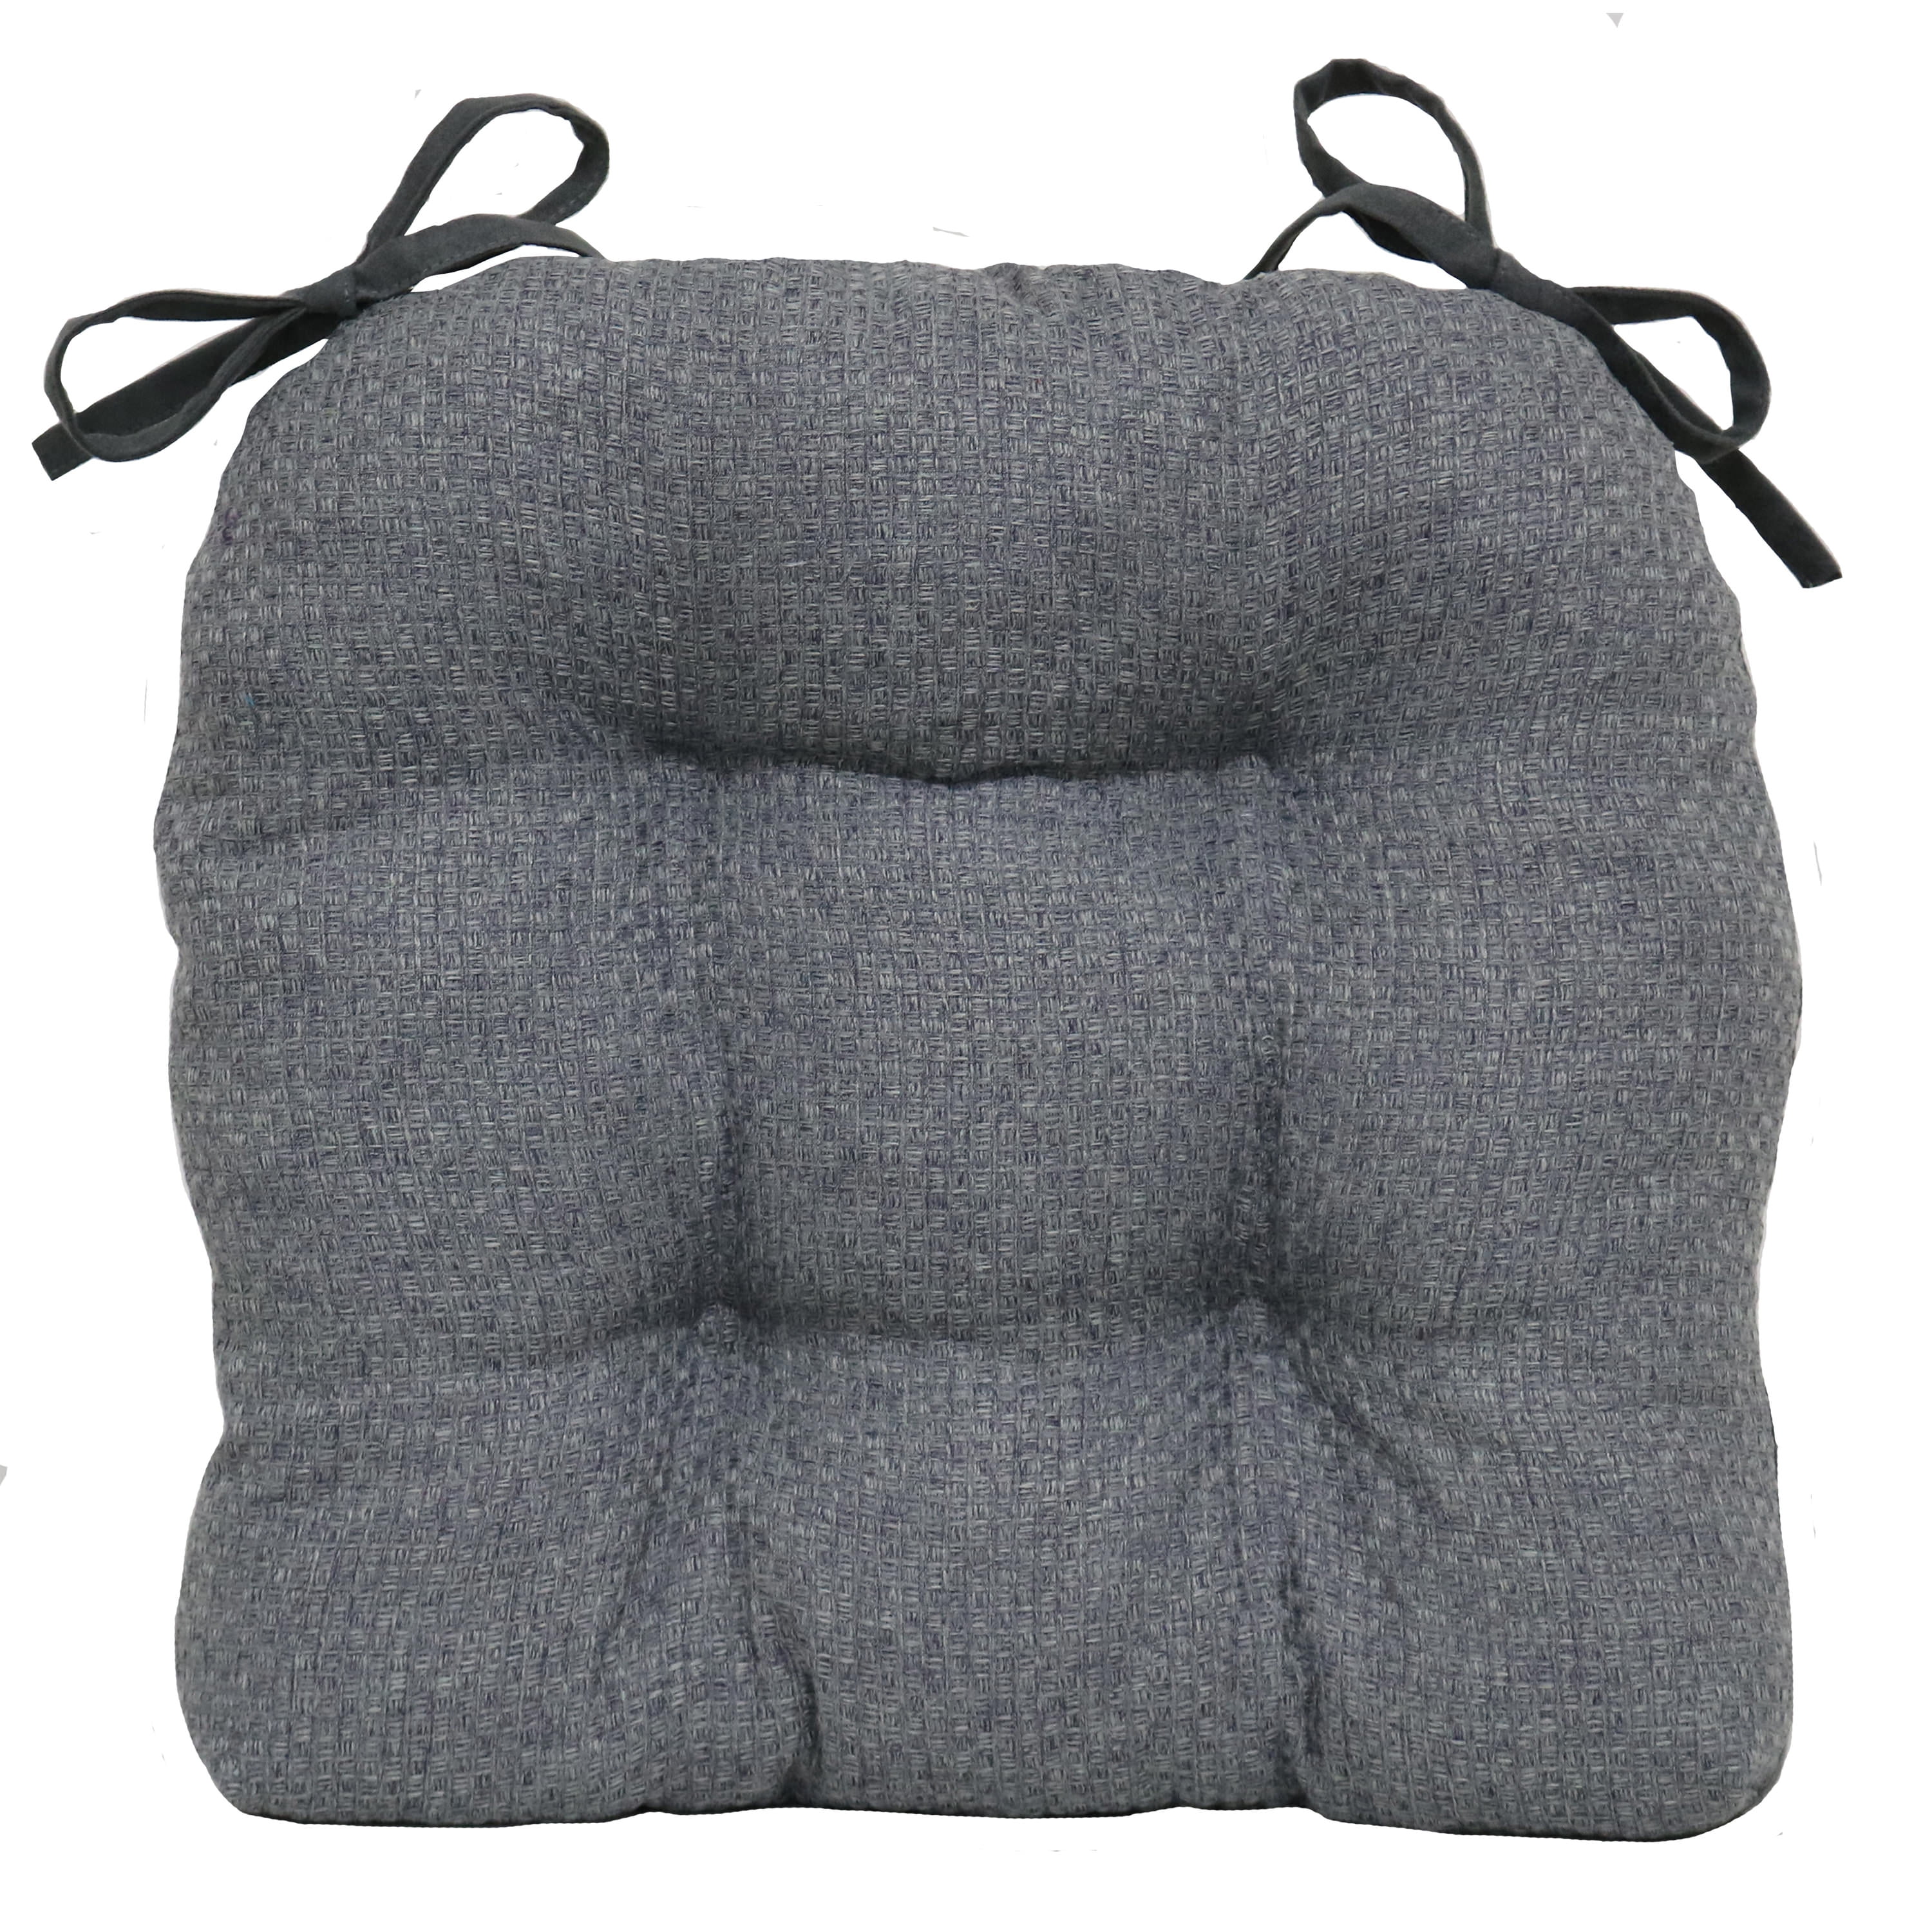  6 Inch Foam Cushion - Prime Eligible